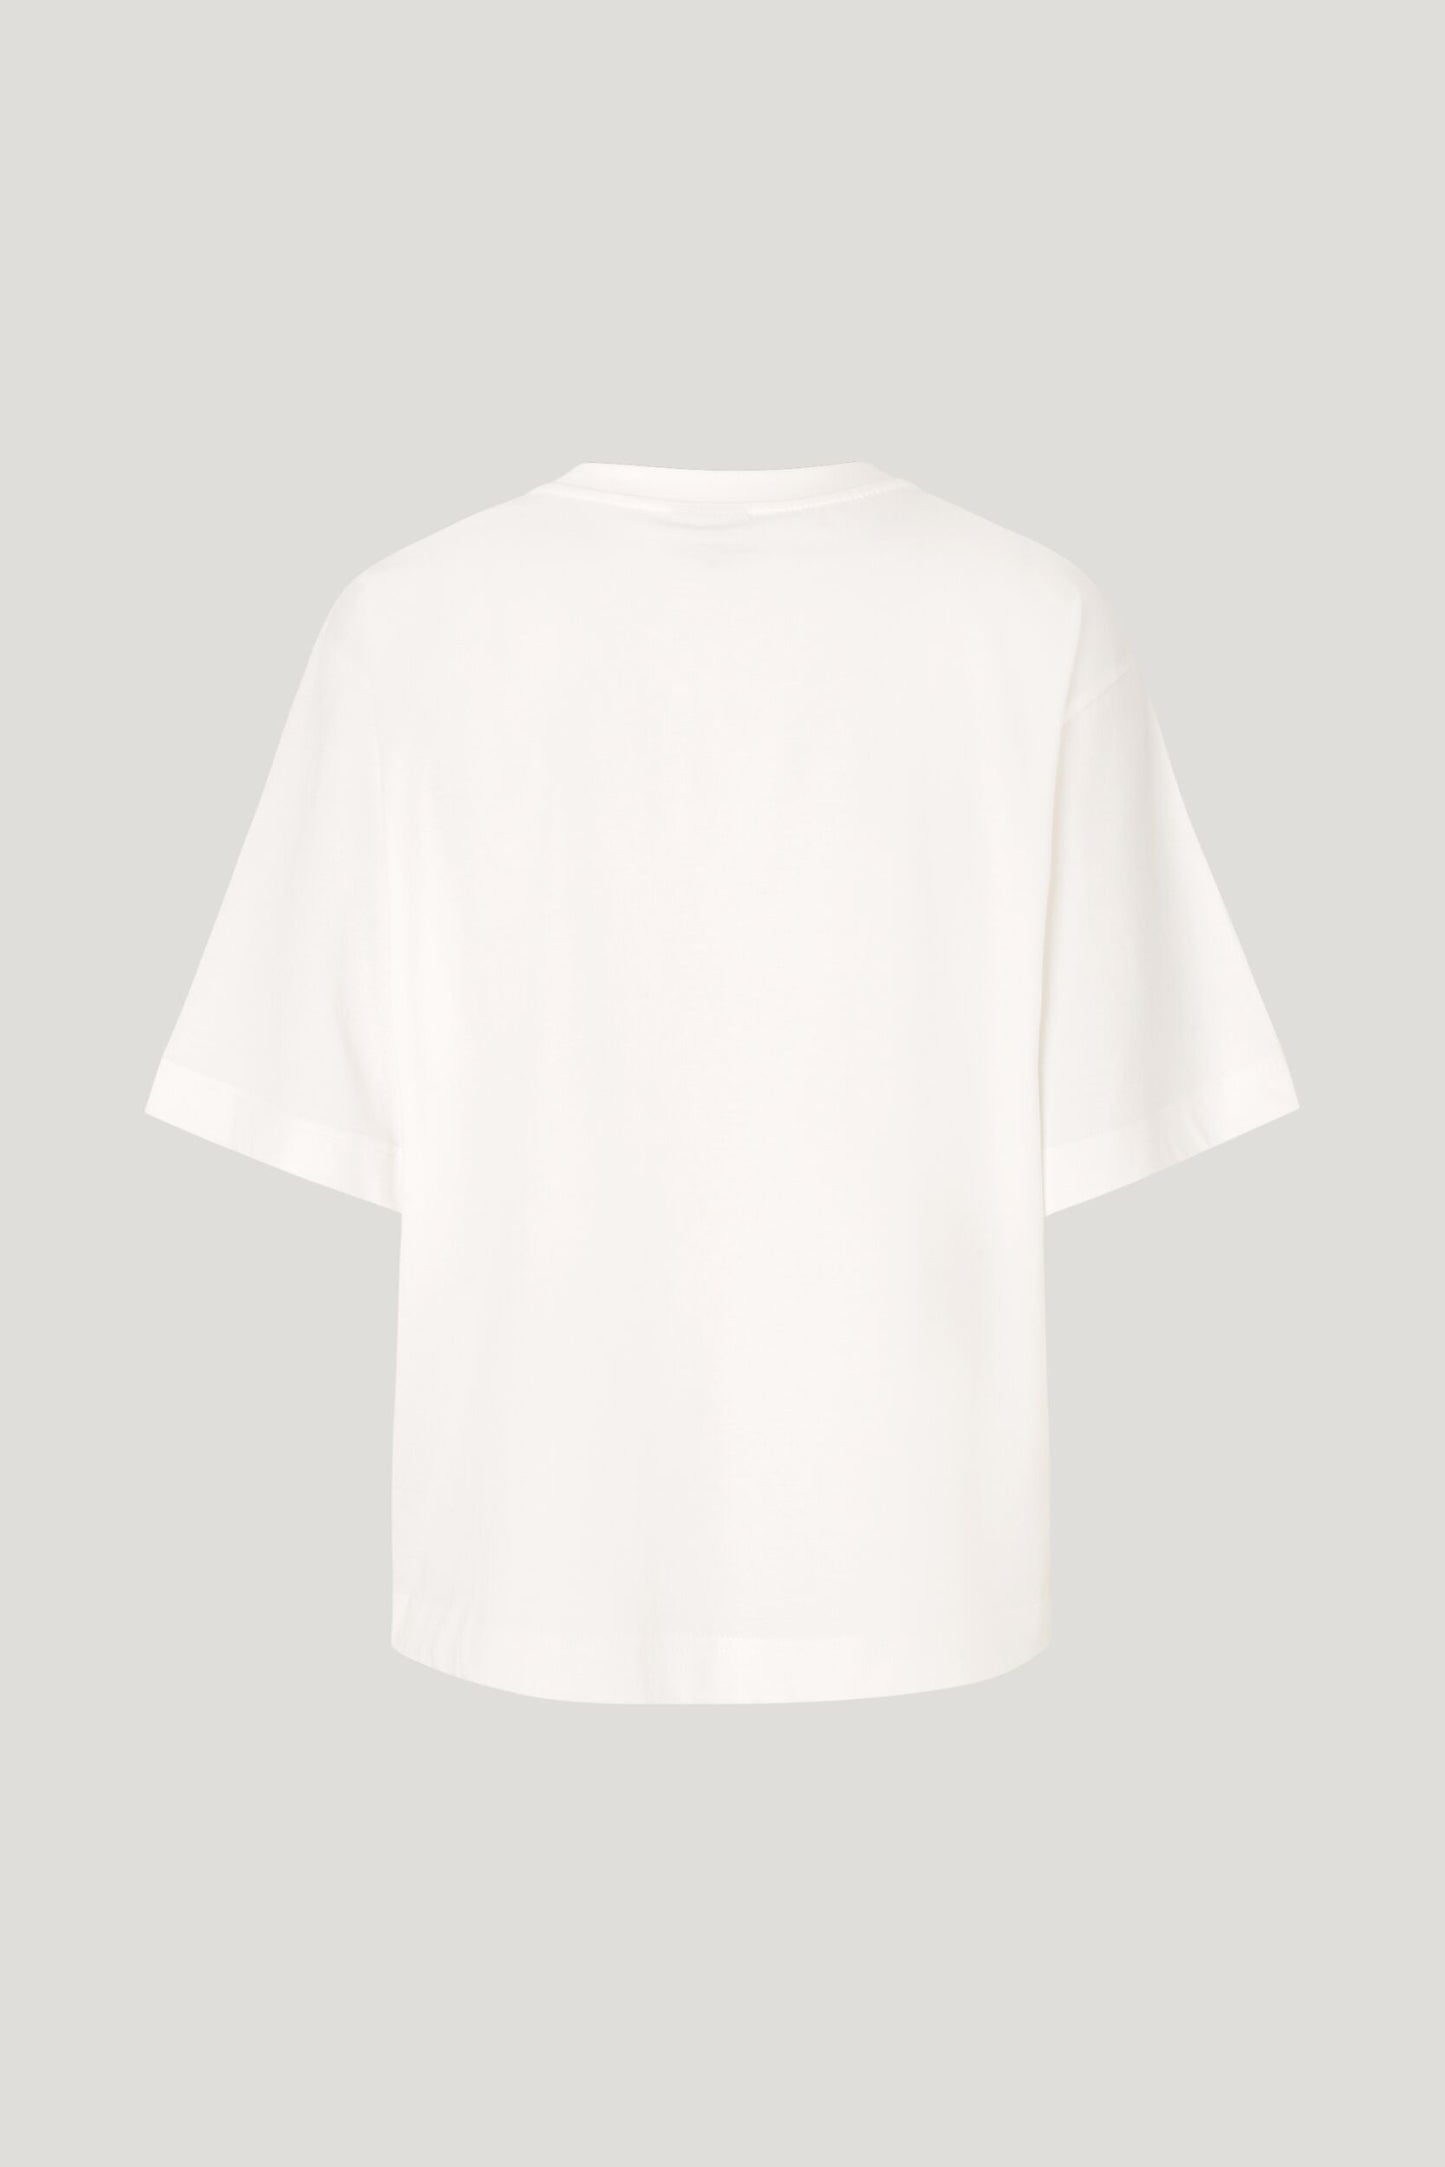 Jilli T-Shirt by Baum und Pferdgarten – The Modu Shop